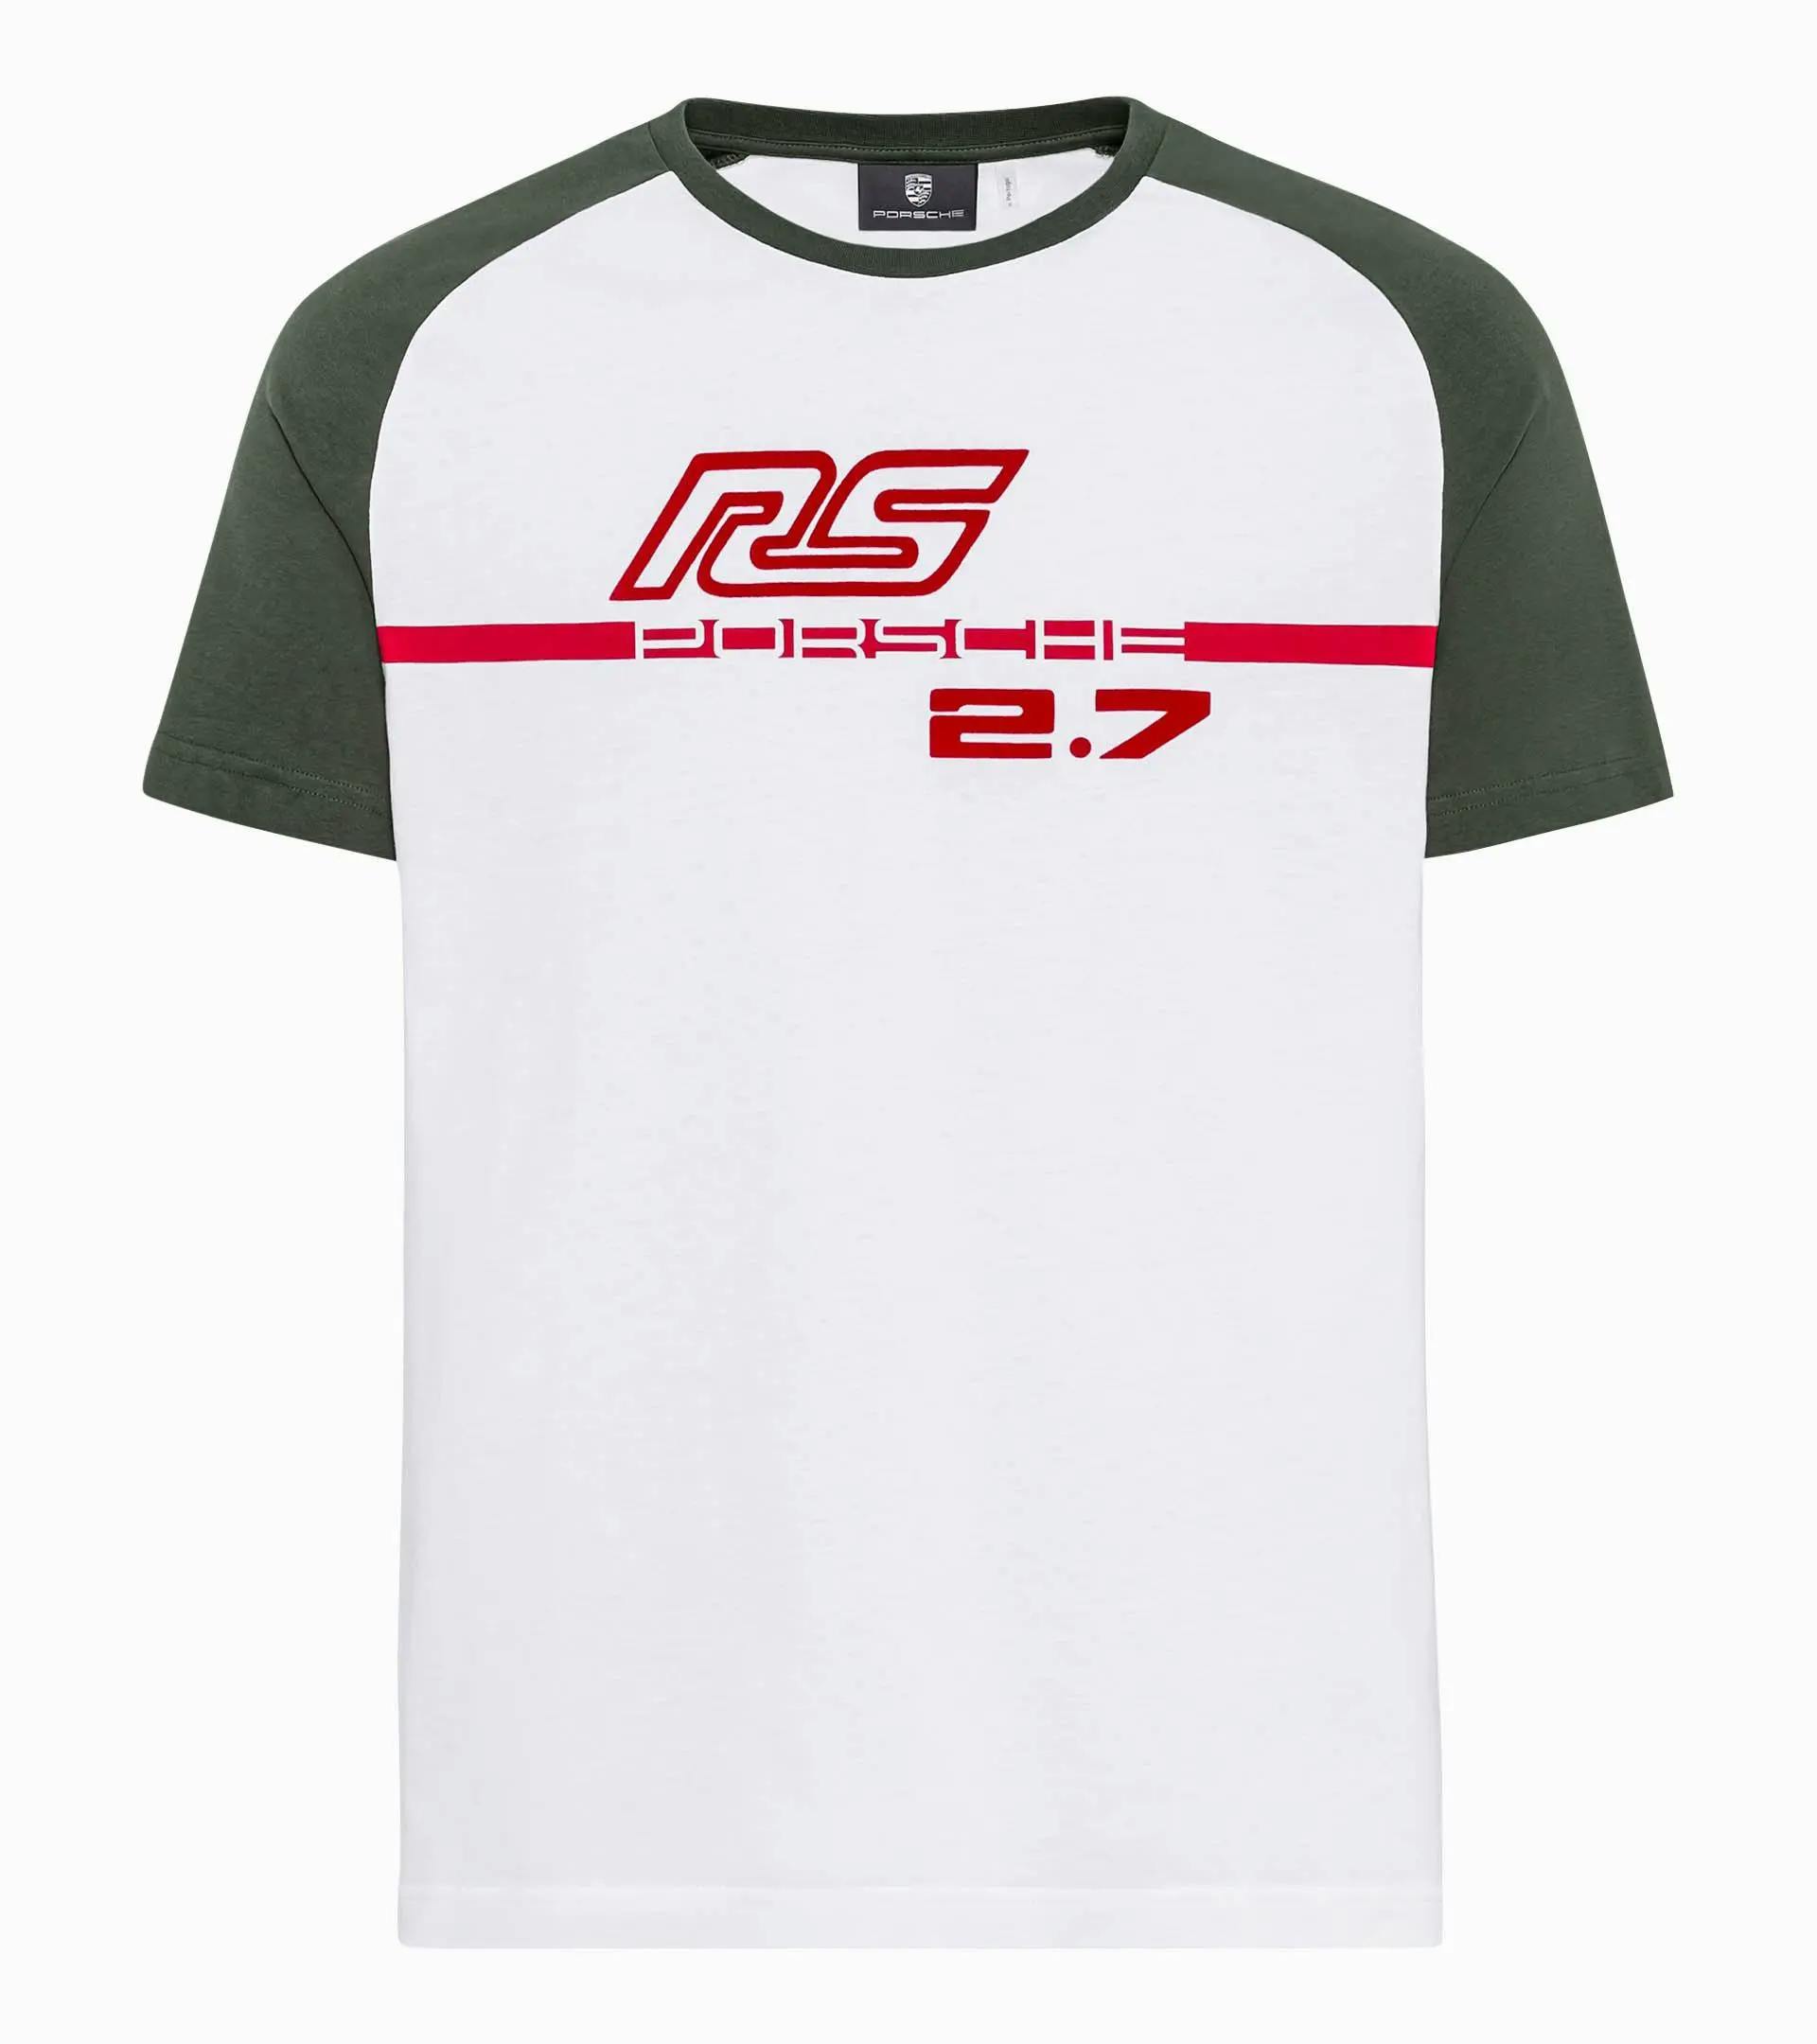 T-shirt – RS 2.7 1